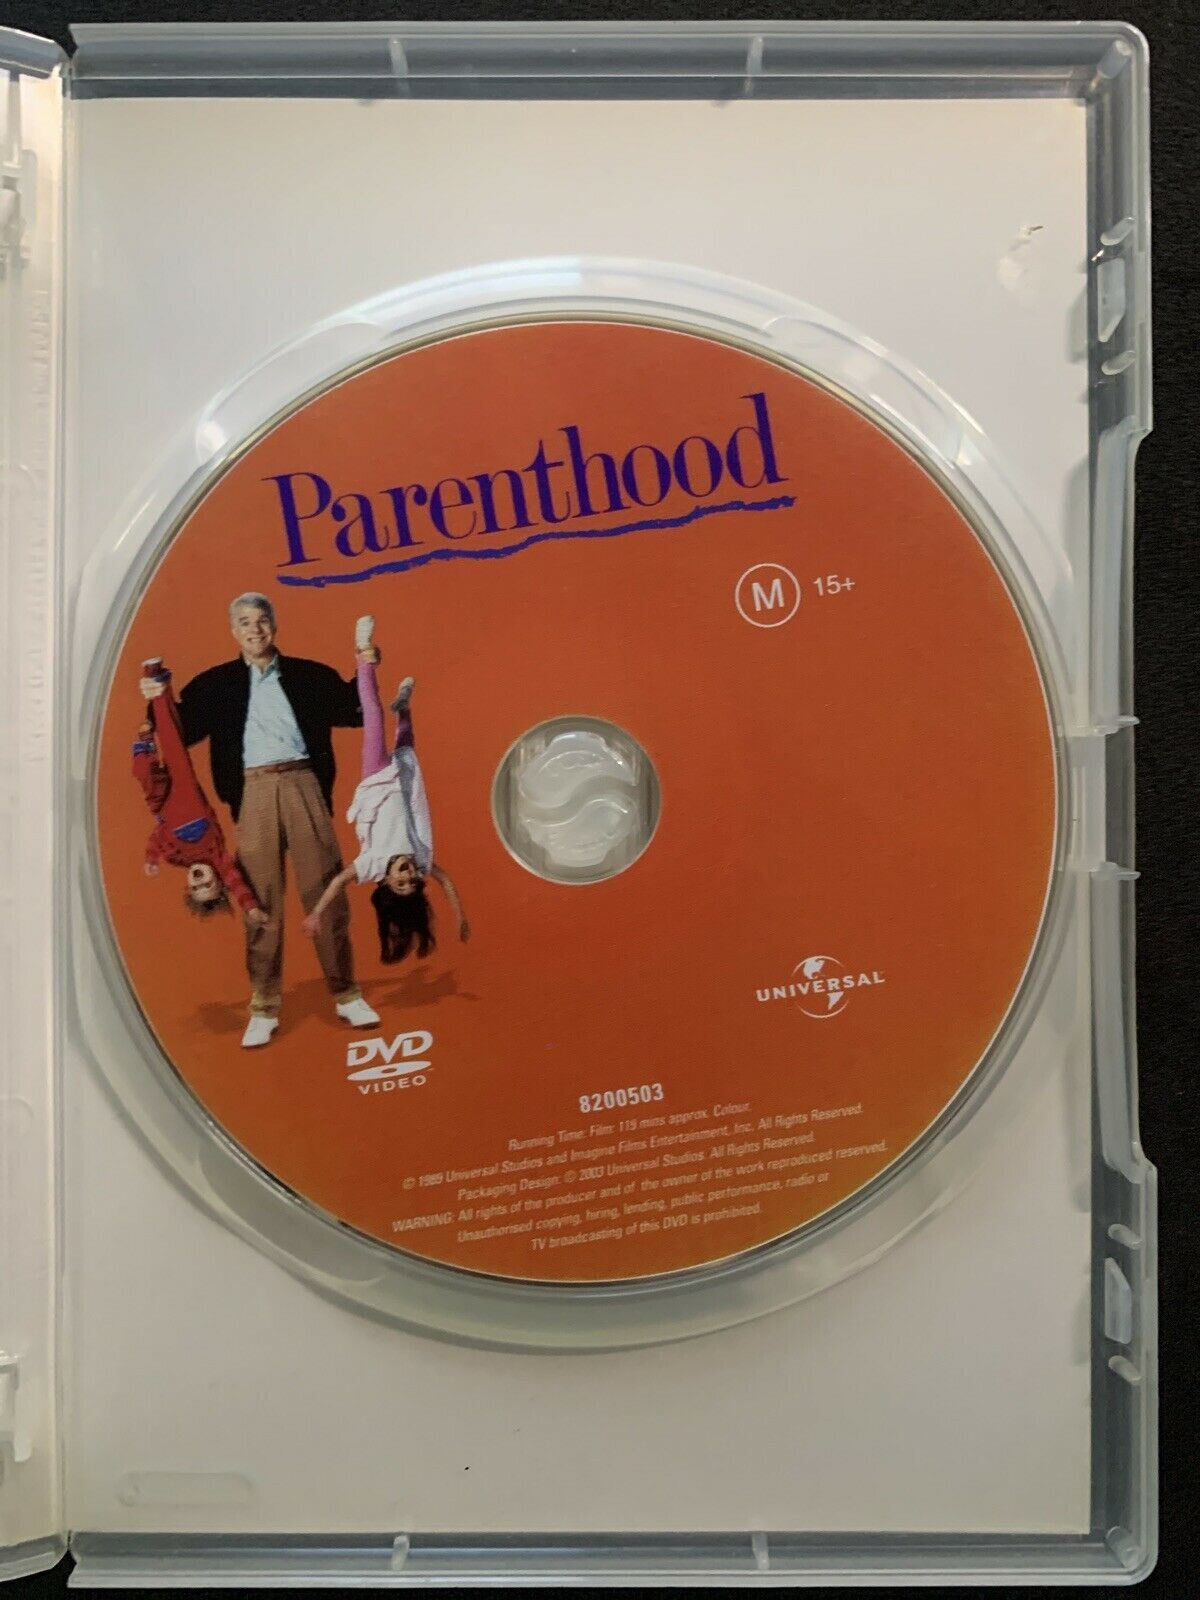 Parenthood (DVD, 1989) Steve Martin, Rick Moranis, Keanu Reeves